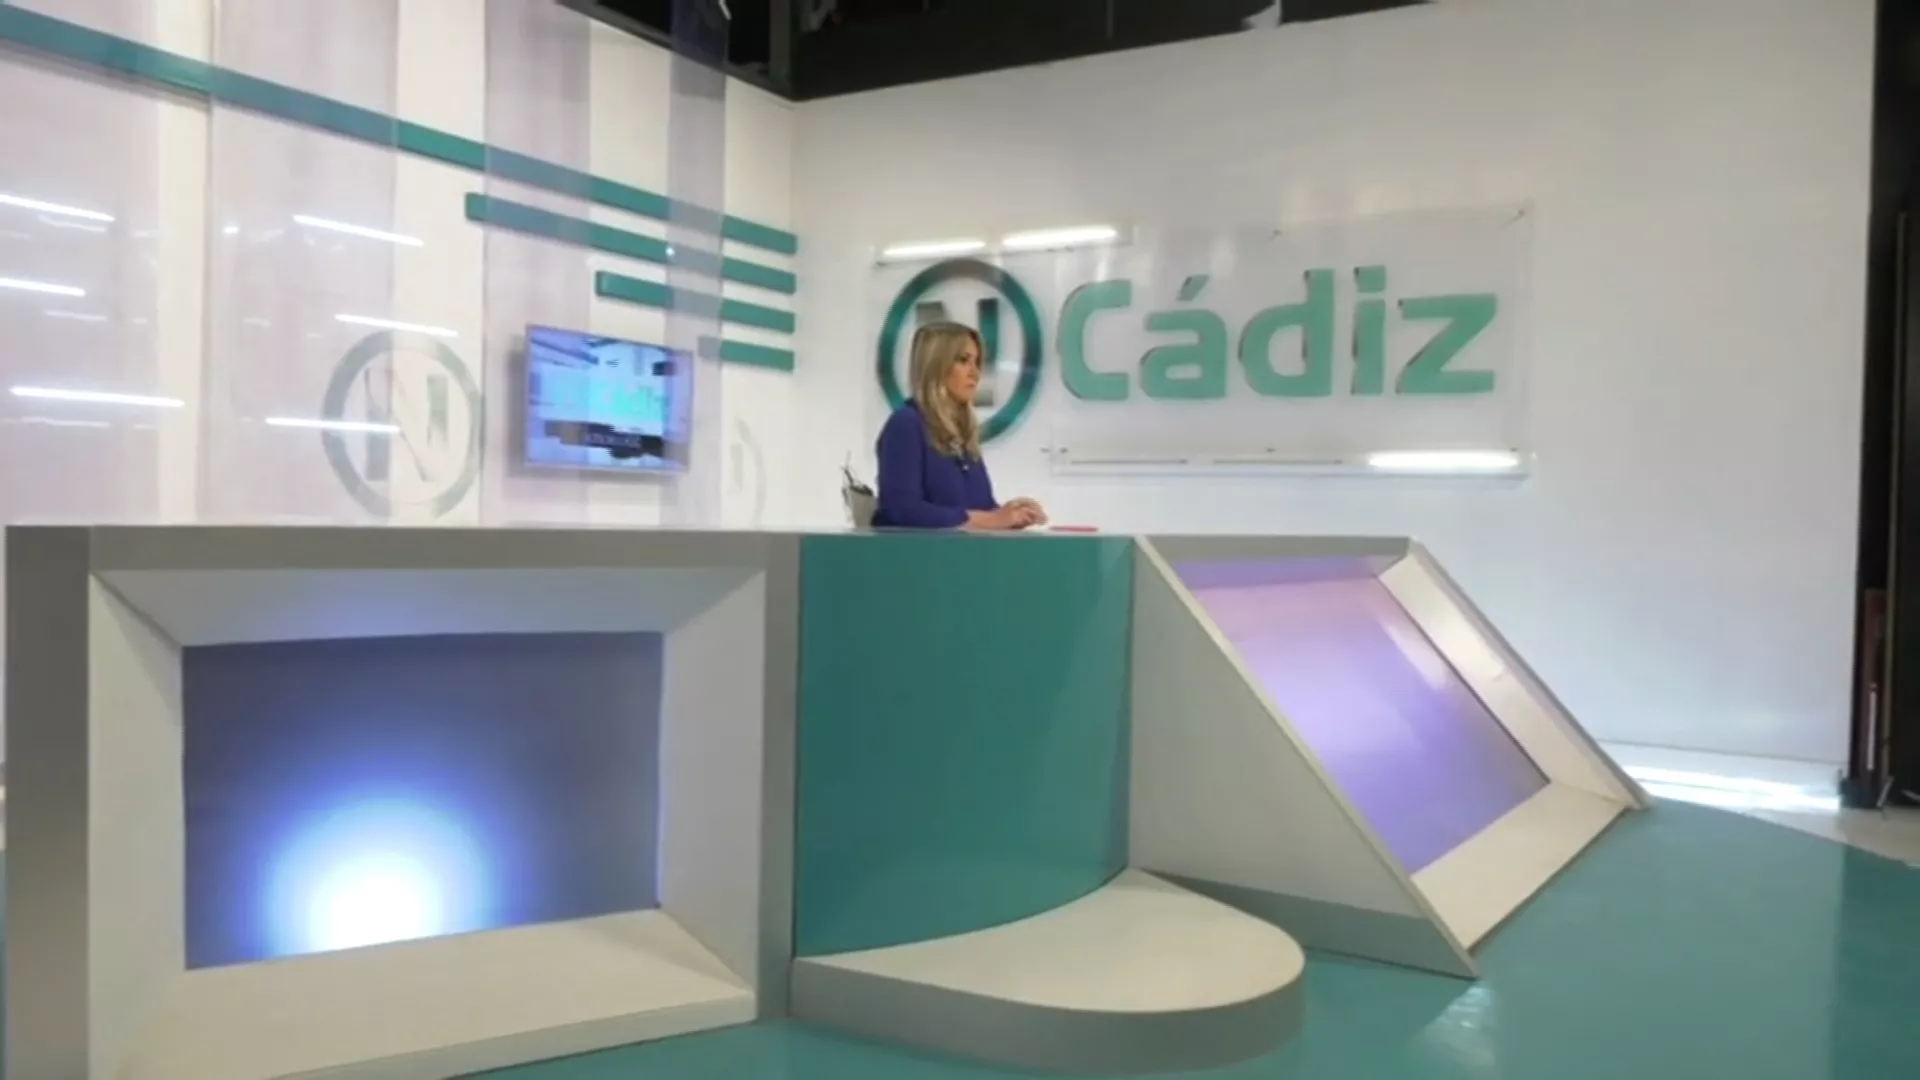 Plató de Noticias Cádiz